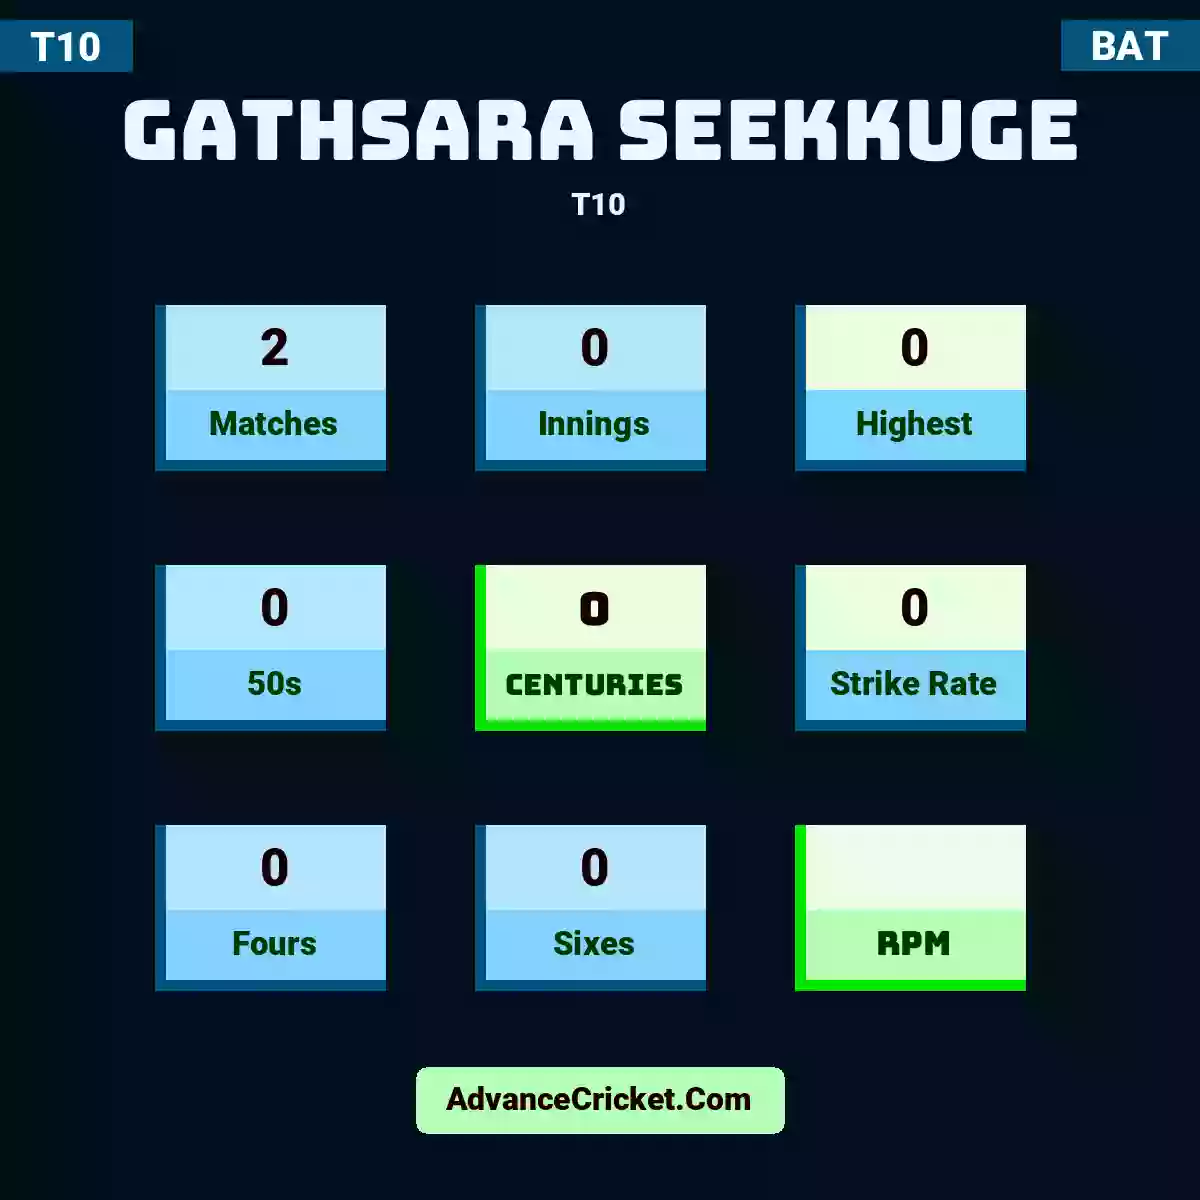 Gathsara Seekkuge T10 , Gathsara Seekkuge played 2 matches, scored 0 runs as highest, 0 half-centuries, and 0 centuries, with a strike rate of 0. G.Seekkuge hit 0 fours and 0 sixes.